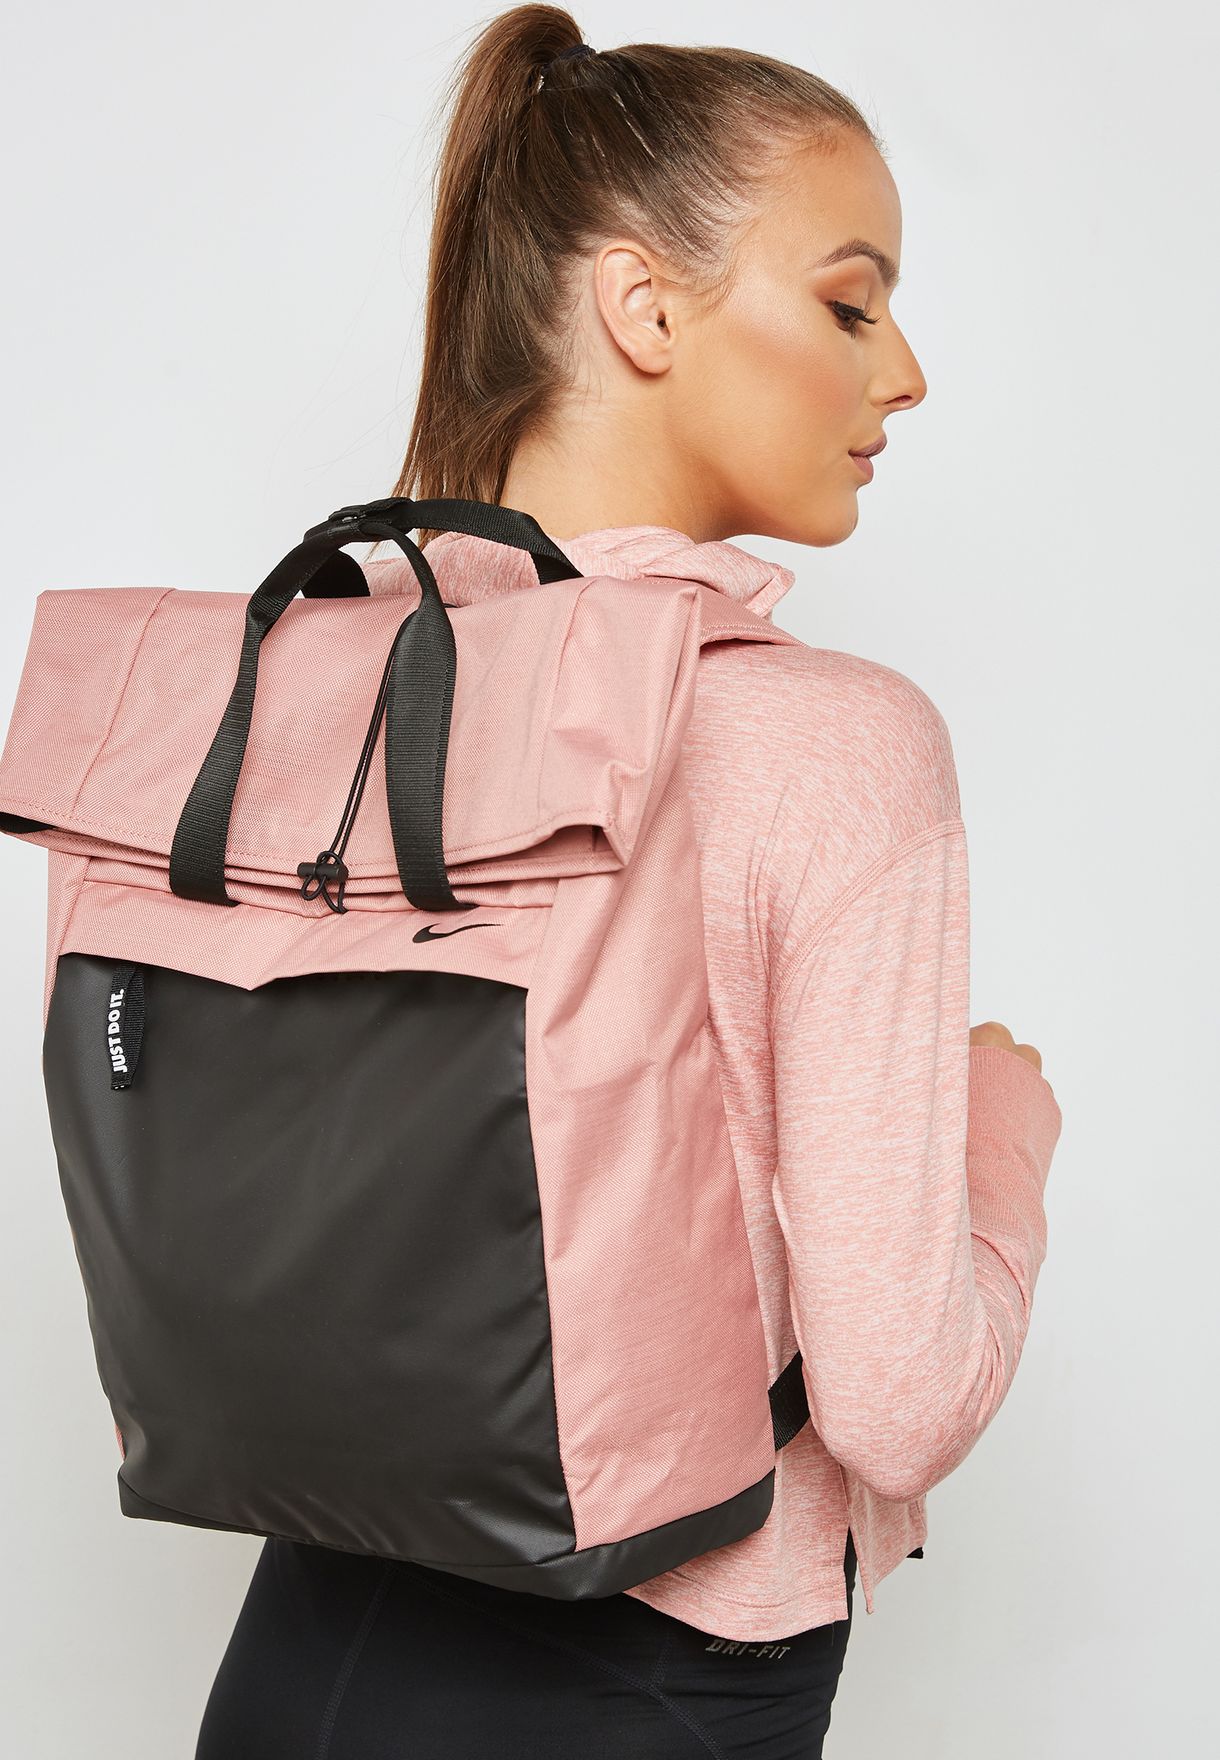 women's graphic training backpack nike radiate